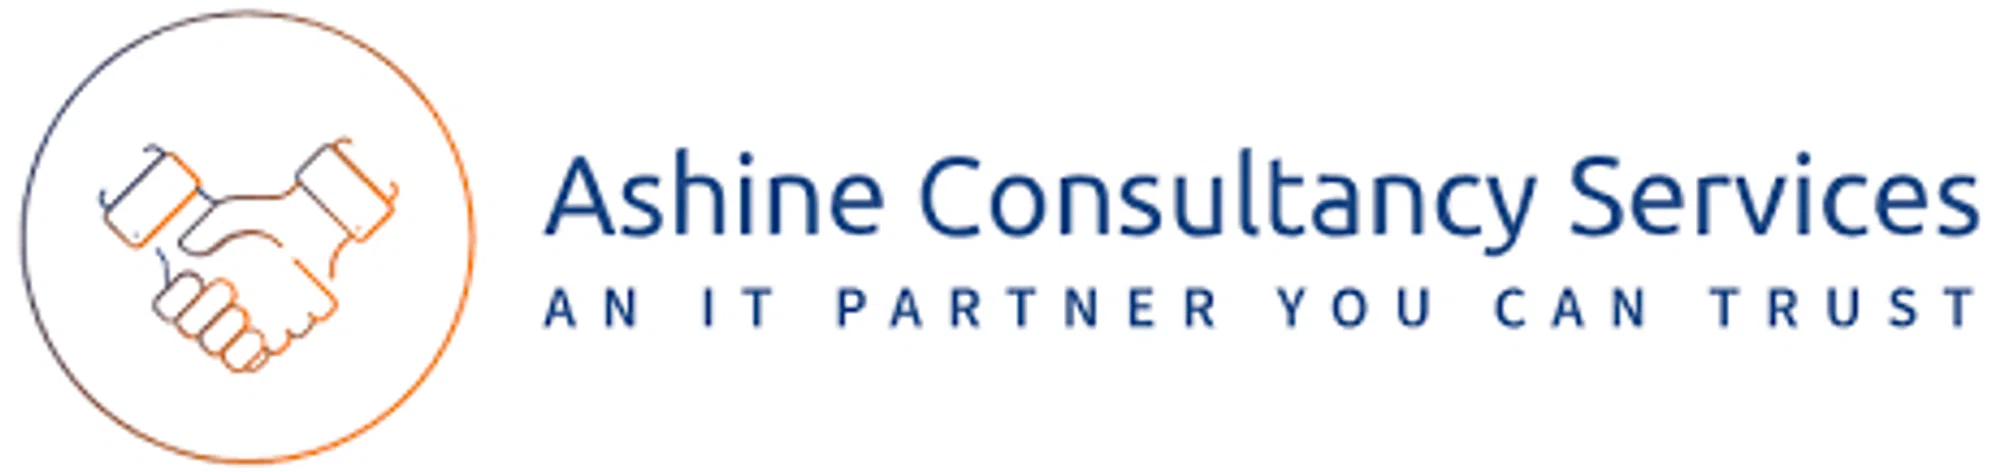 Ashine Consultancy Services